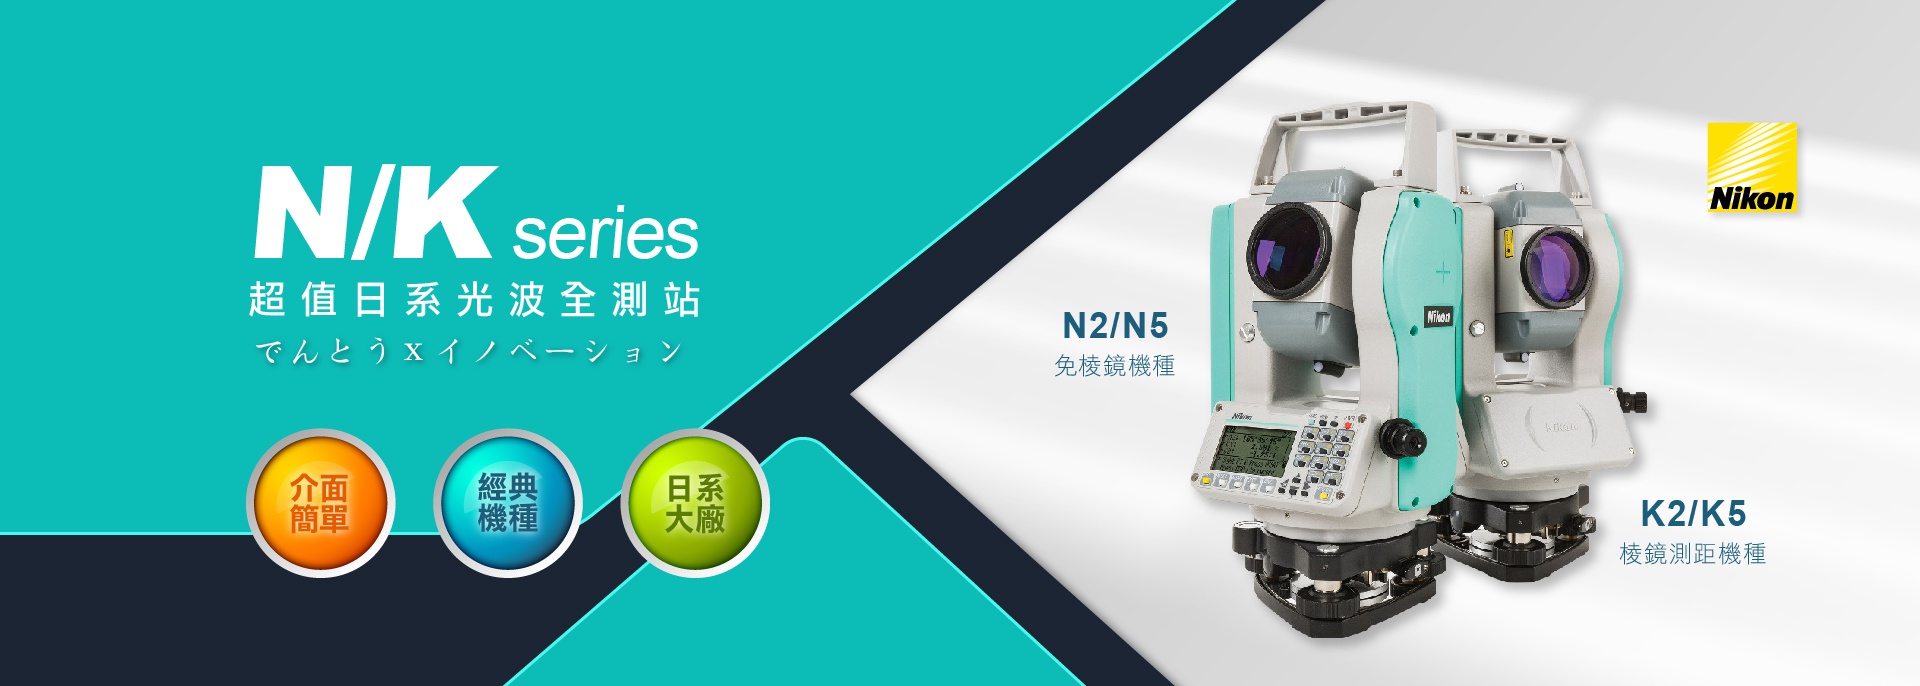 Nikon N系列免棱鏡光波全測站